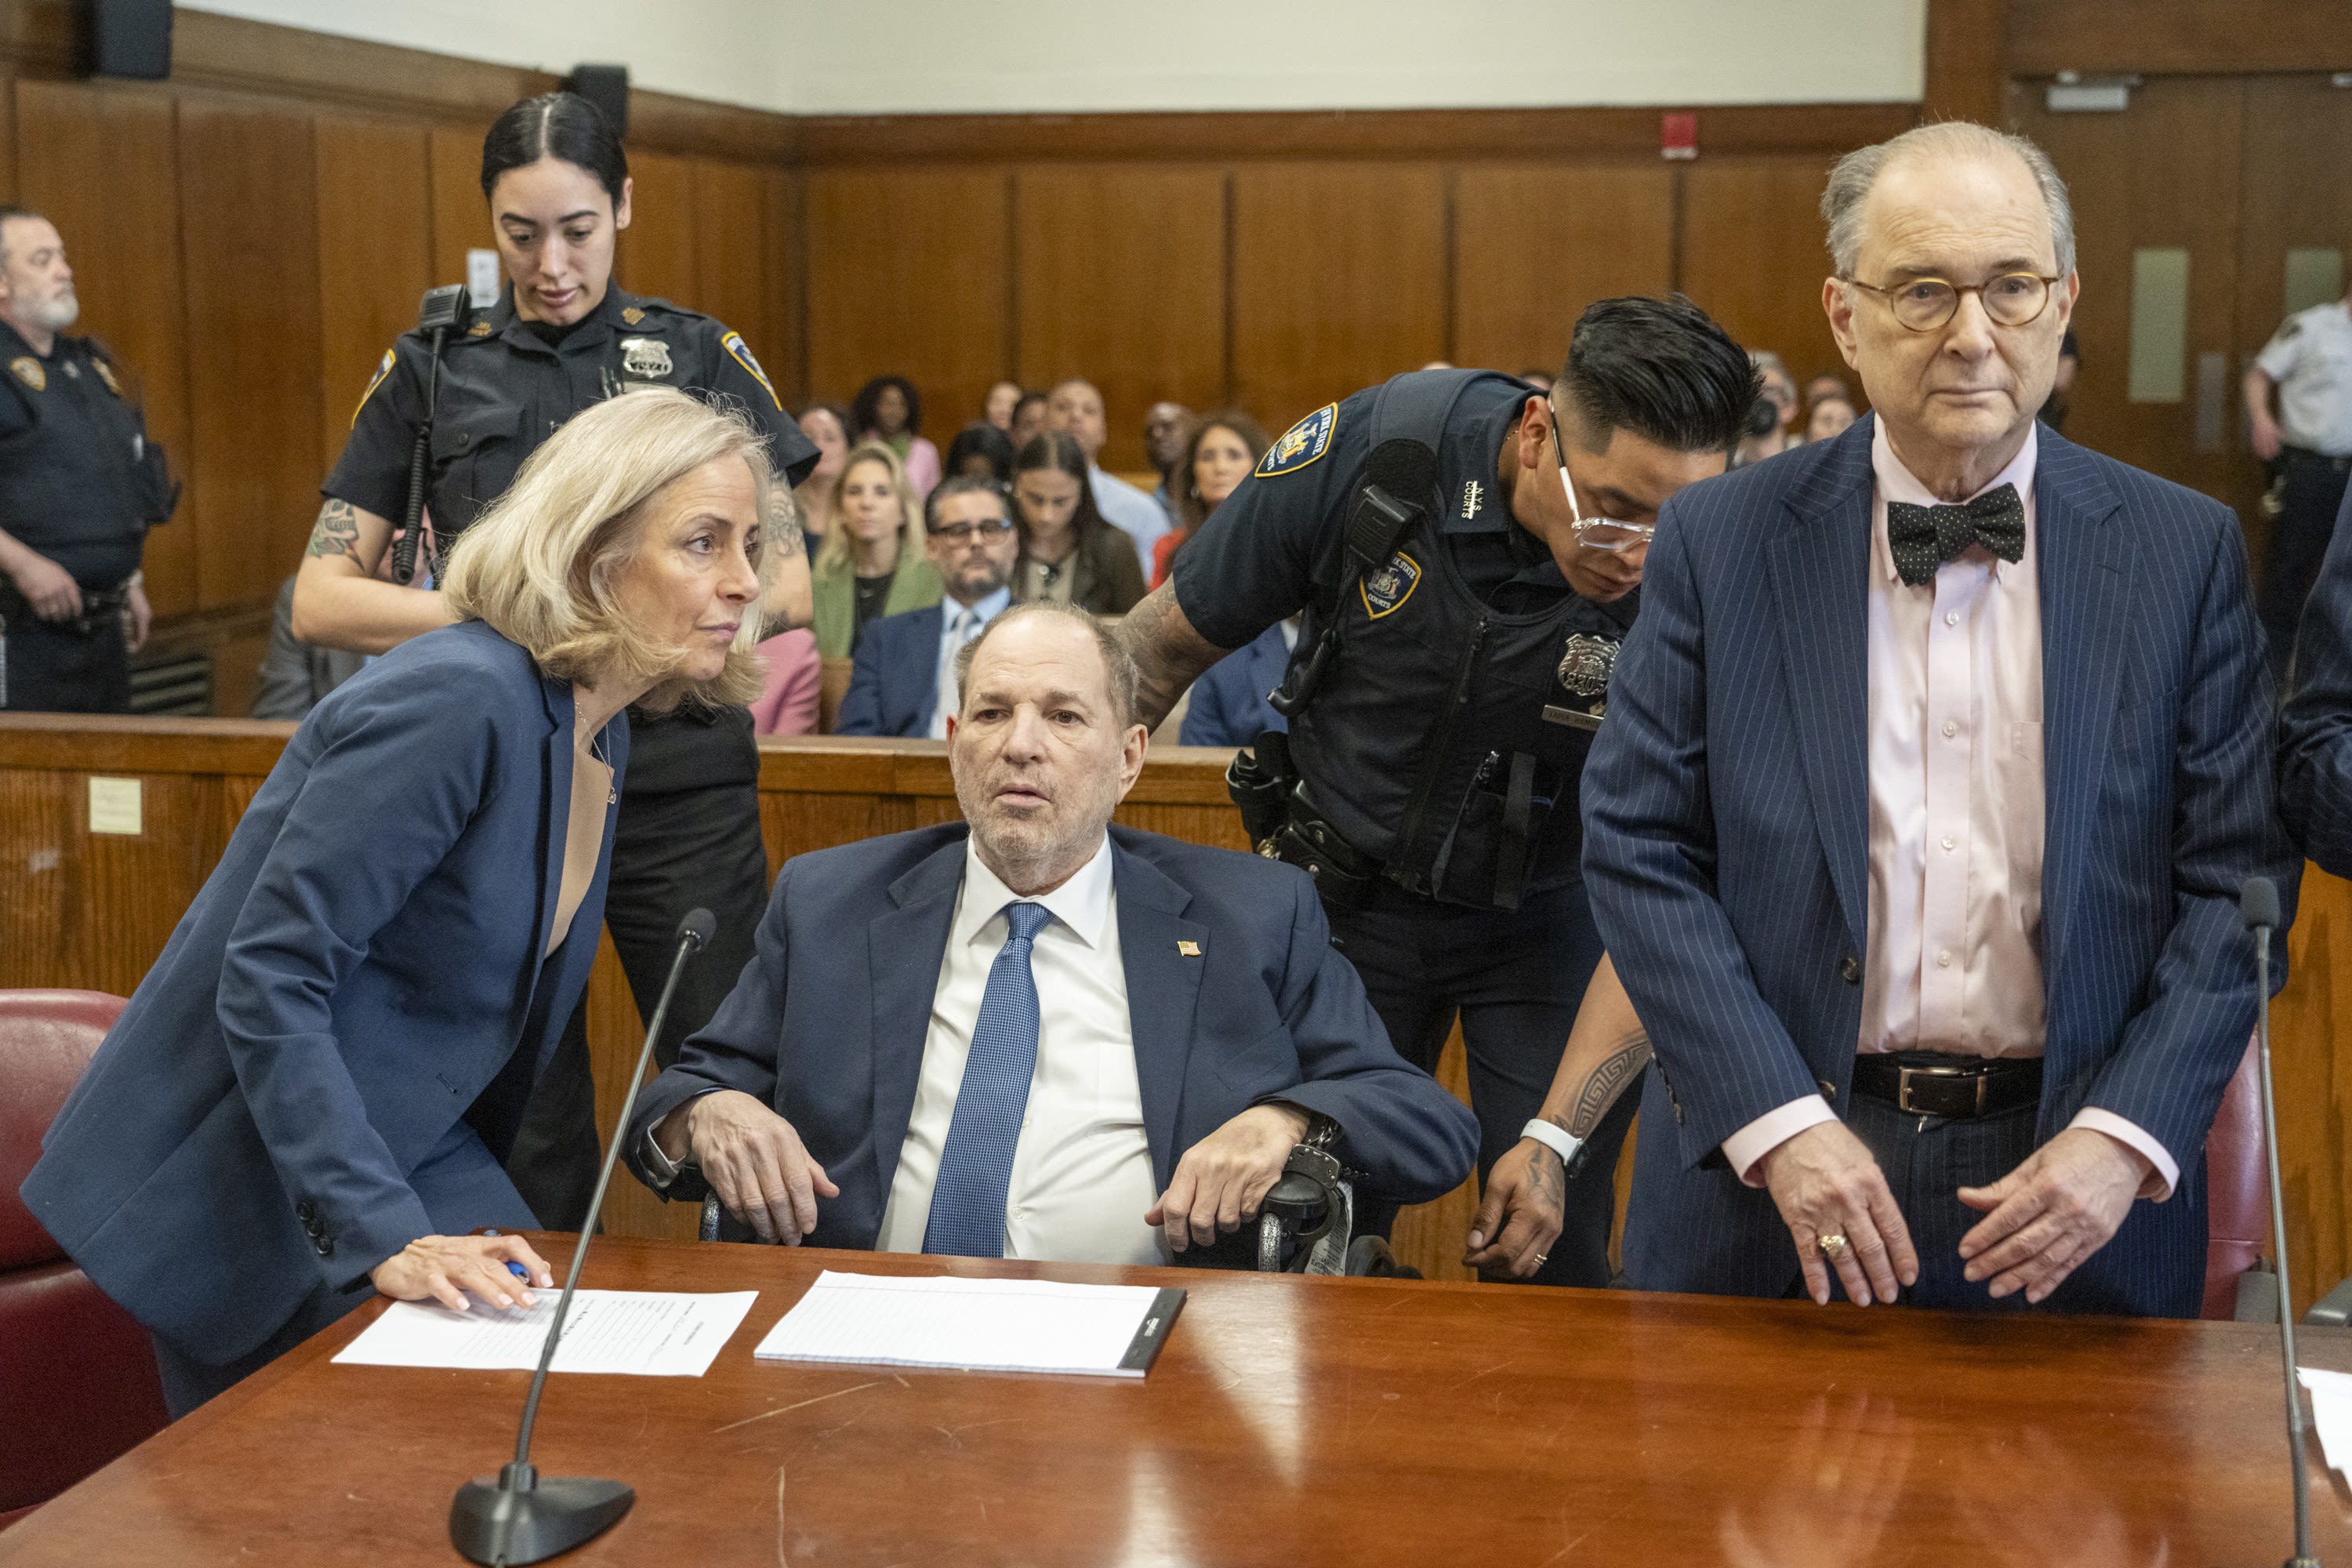 Bid to extradite Harvey Weinstein to California fought by NYC prosecutors